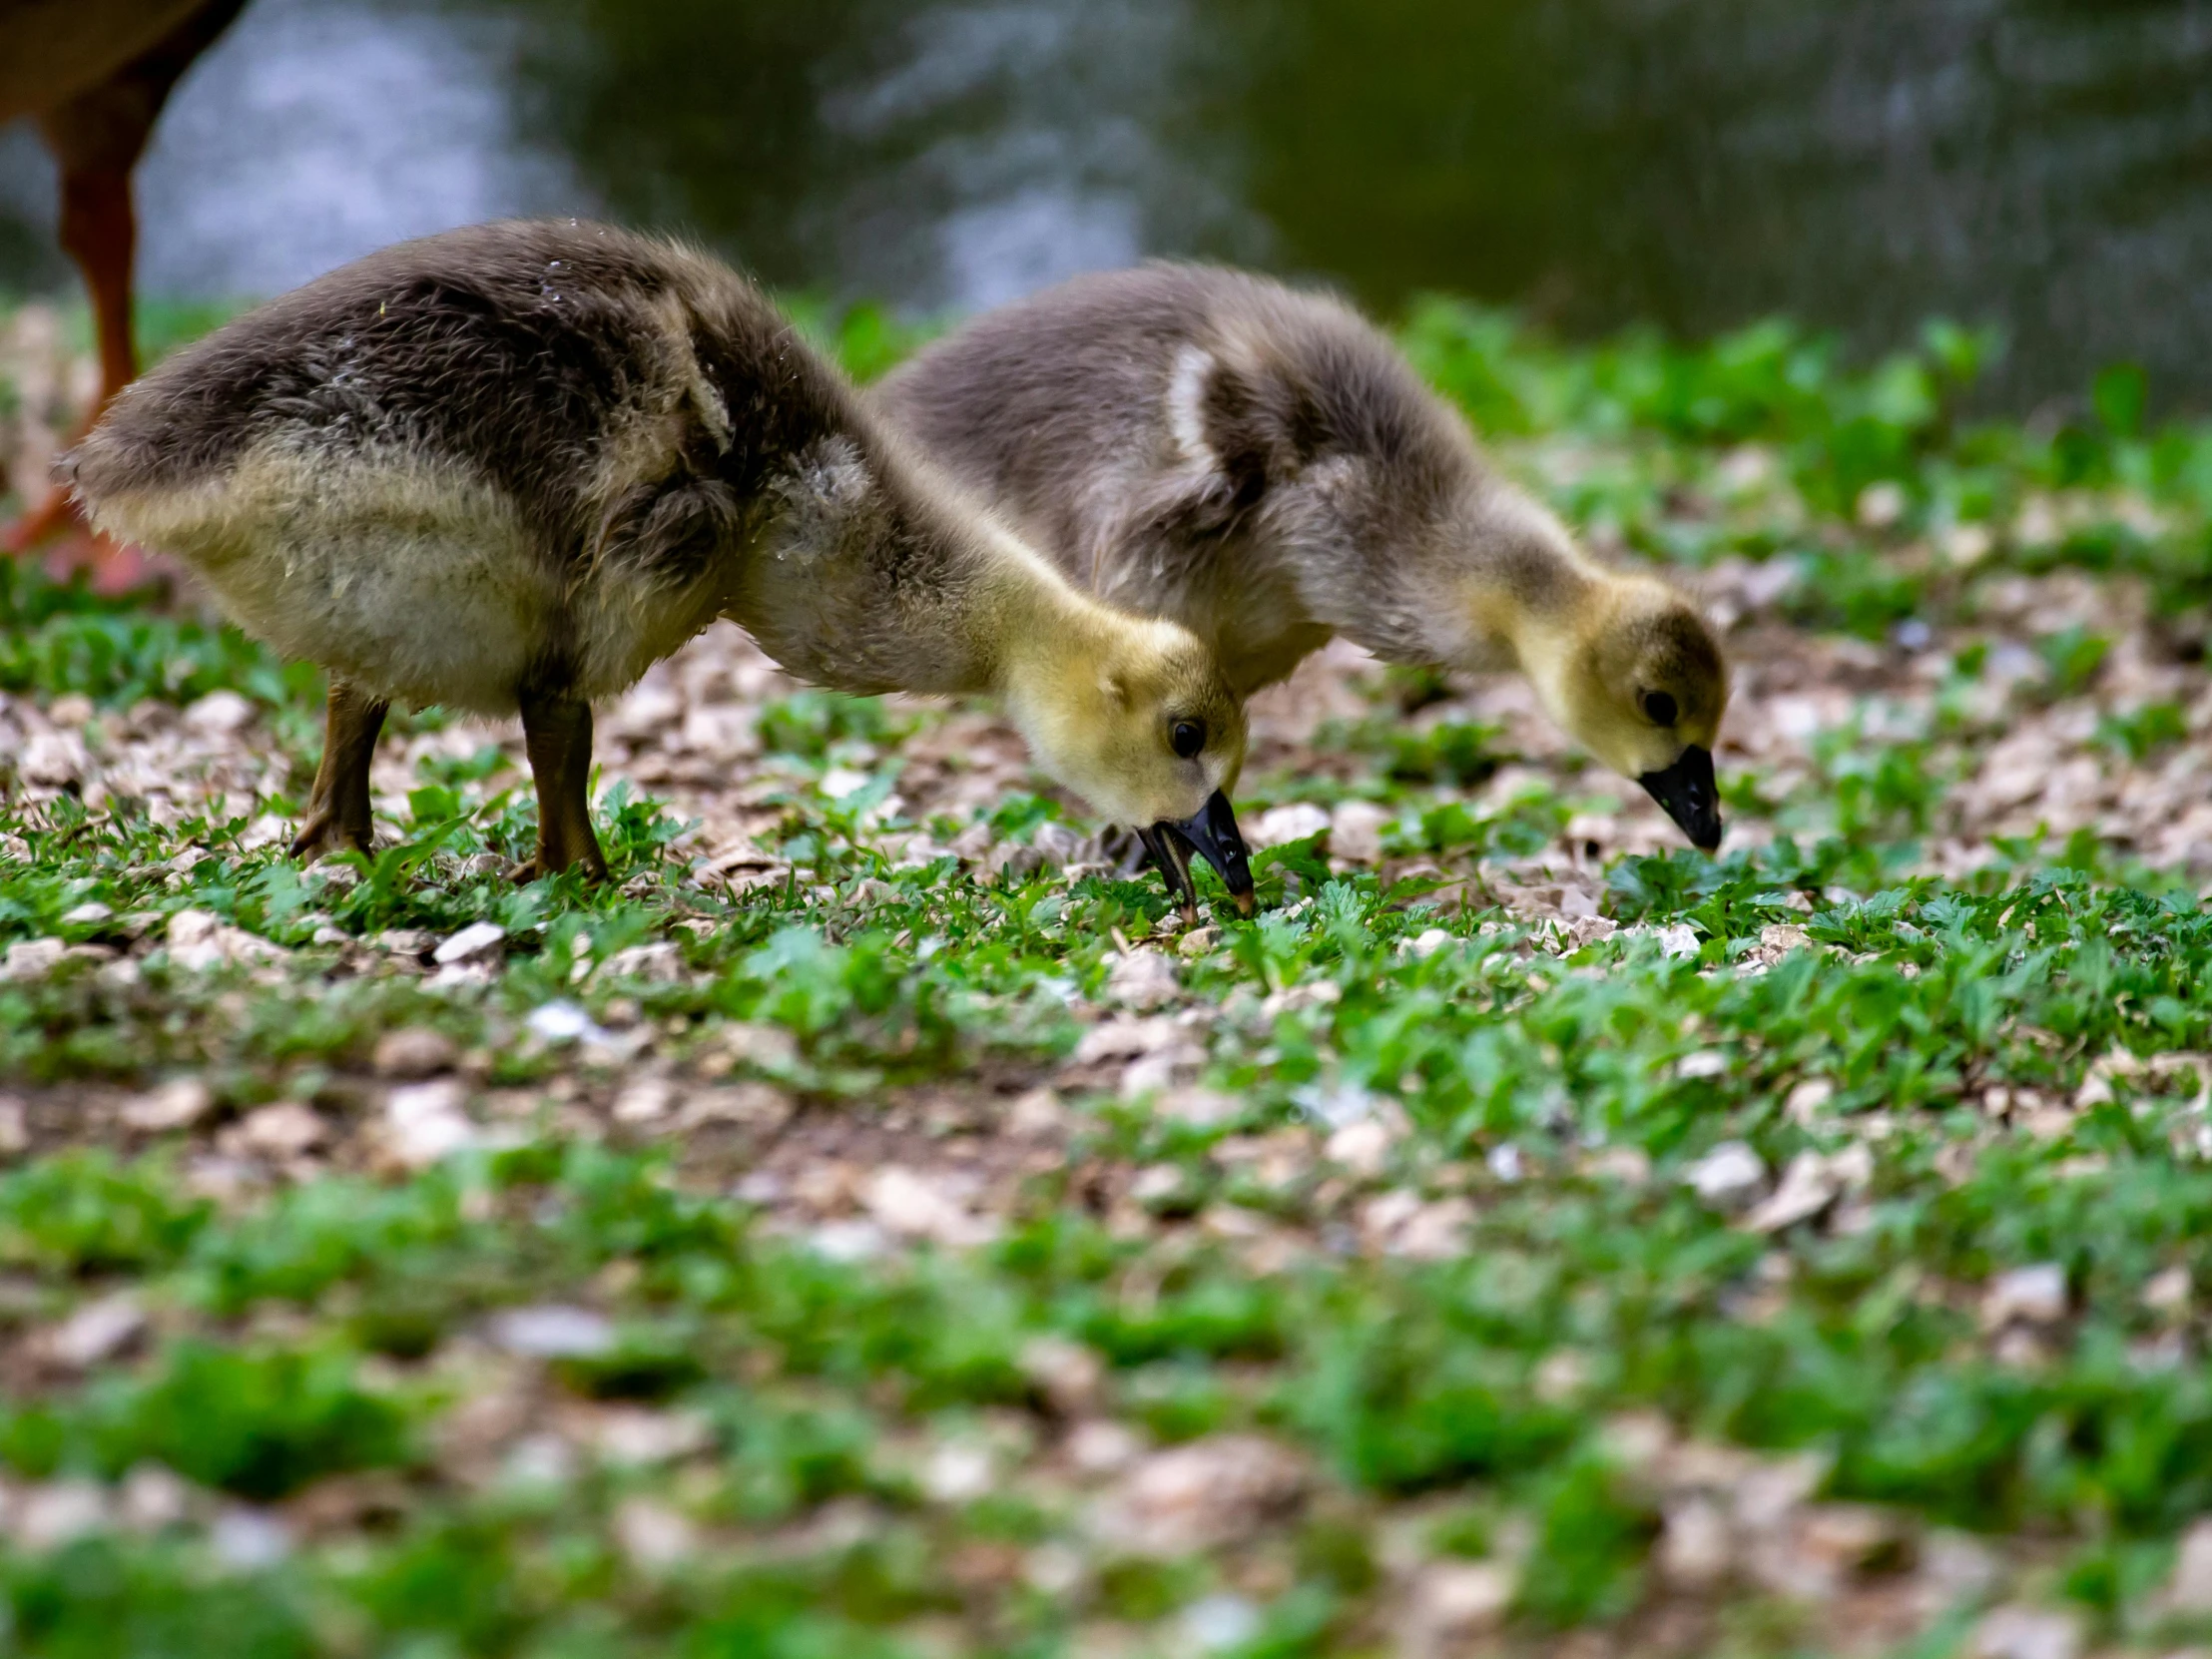 two geese walking along grass near water